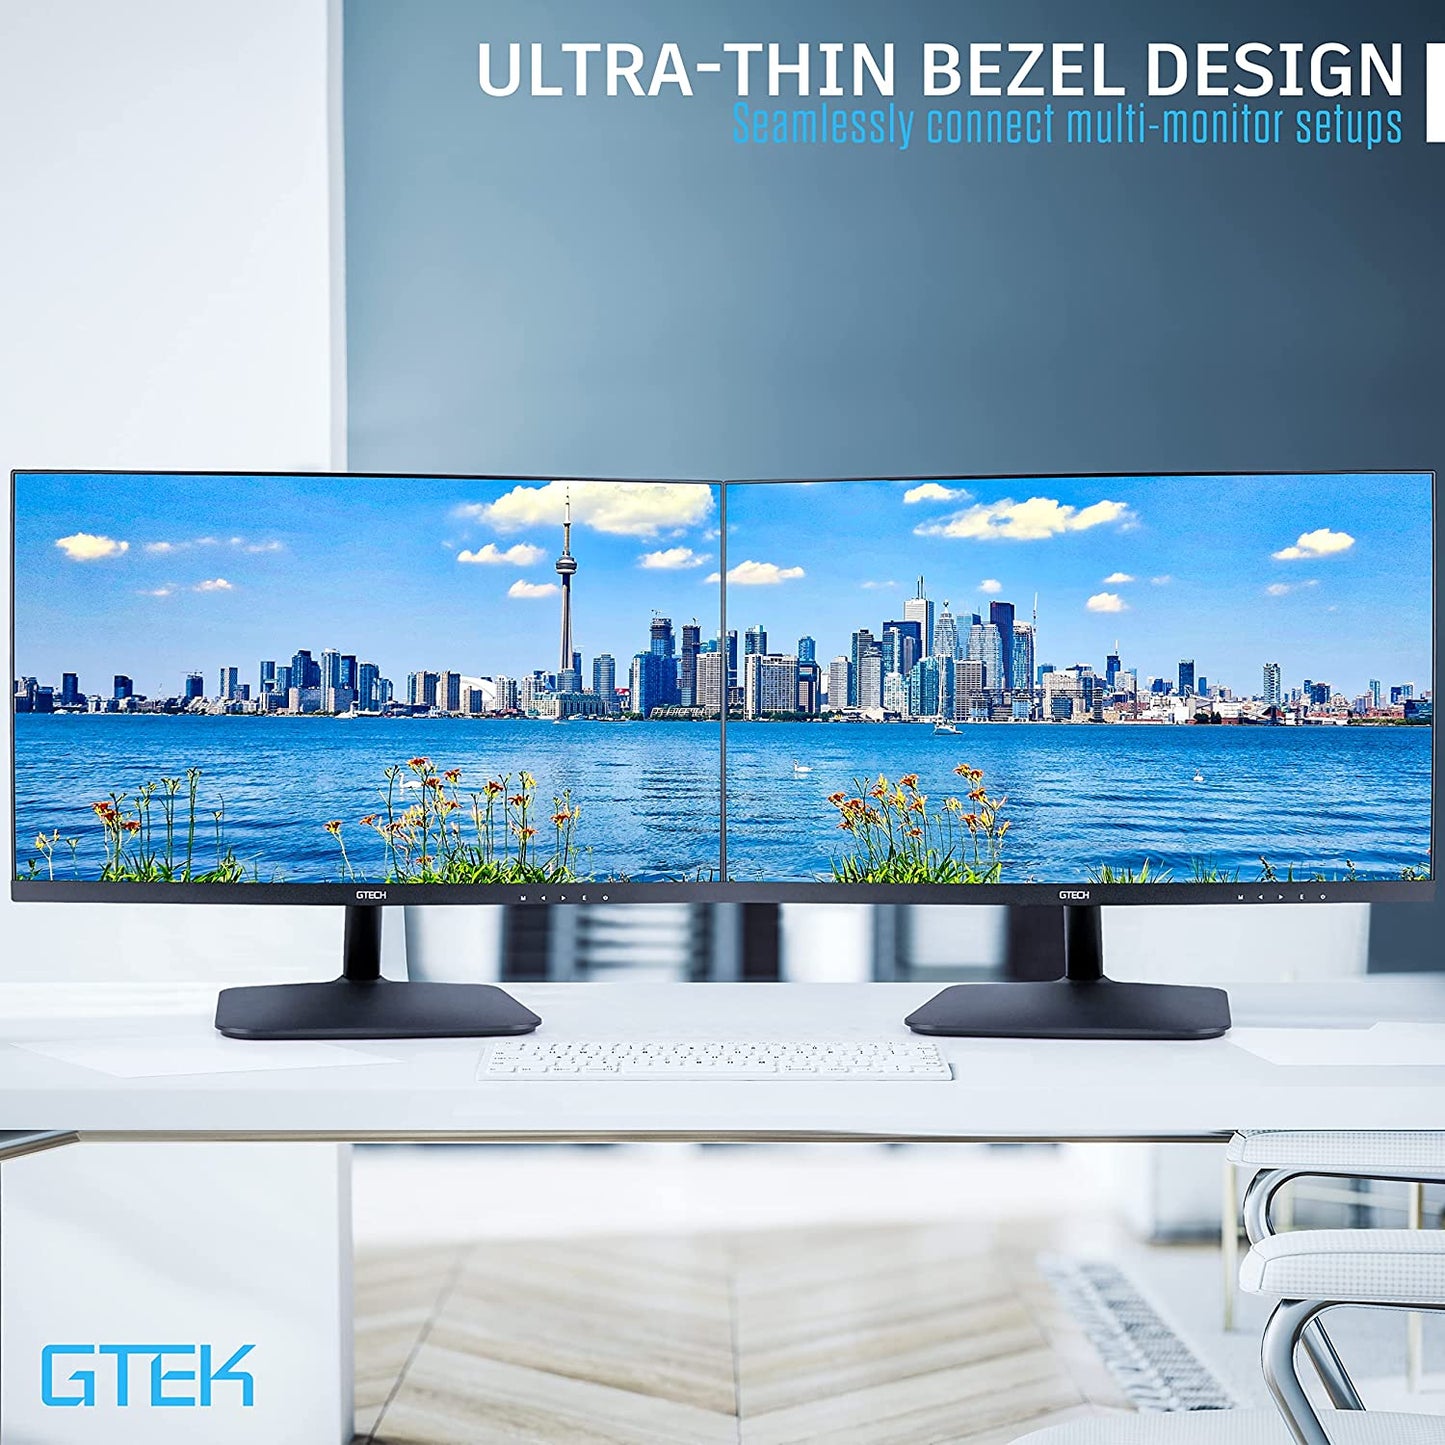 GTEK 24 Inch 75Hz Frameless Computer Monitor, FHD 1080p LED Display, LCD Screen